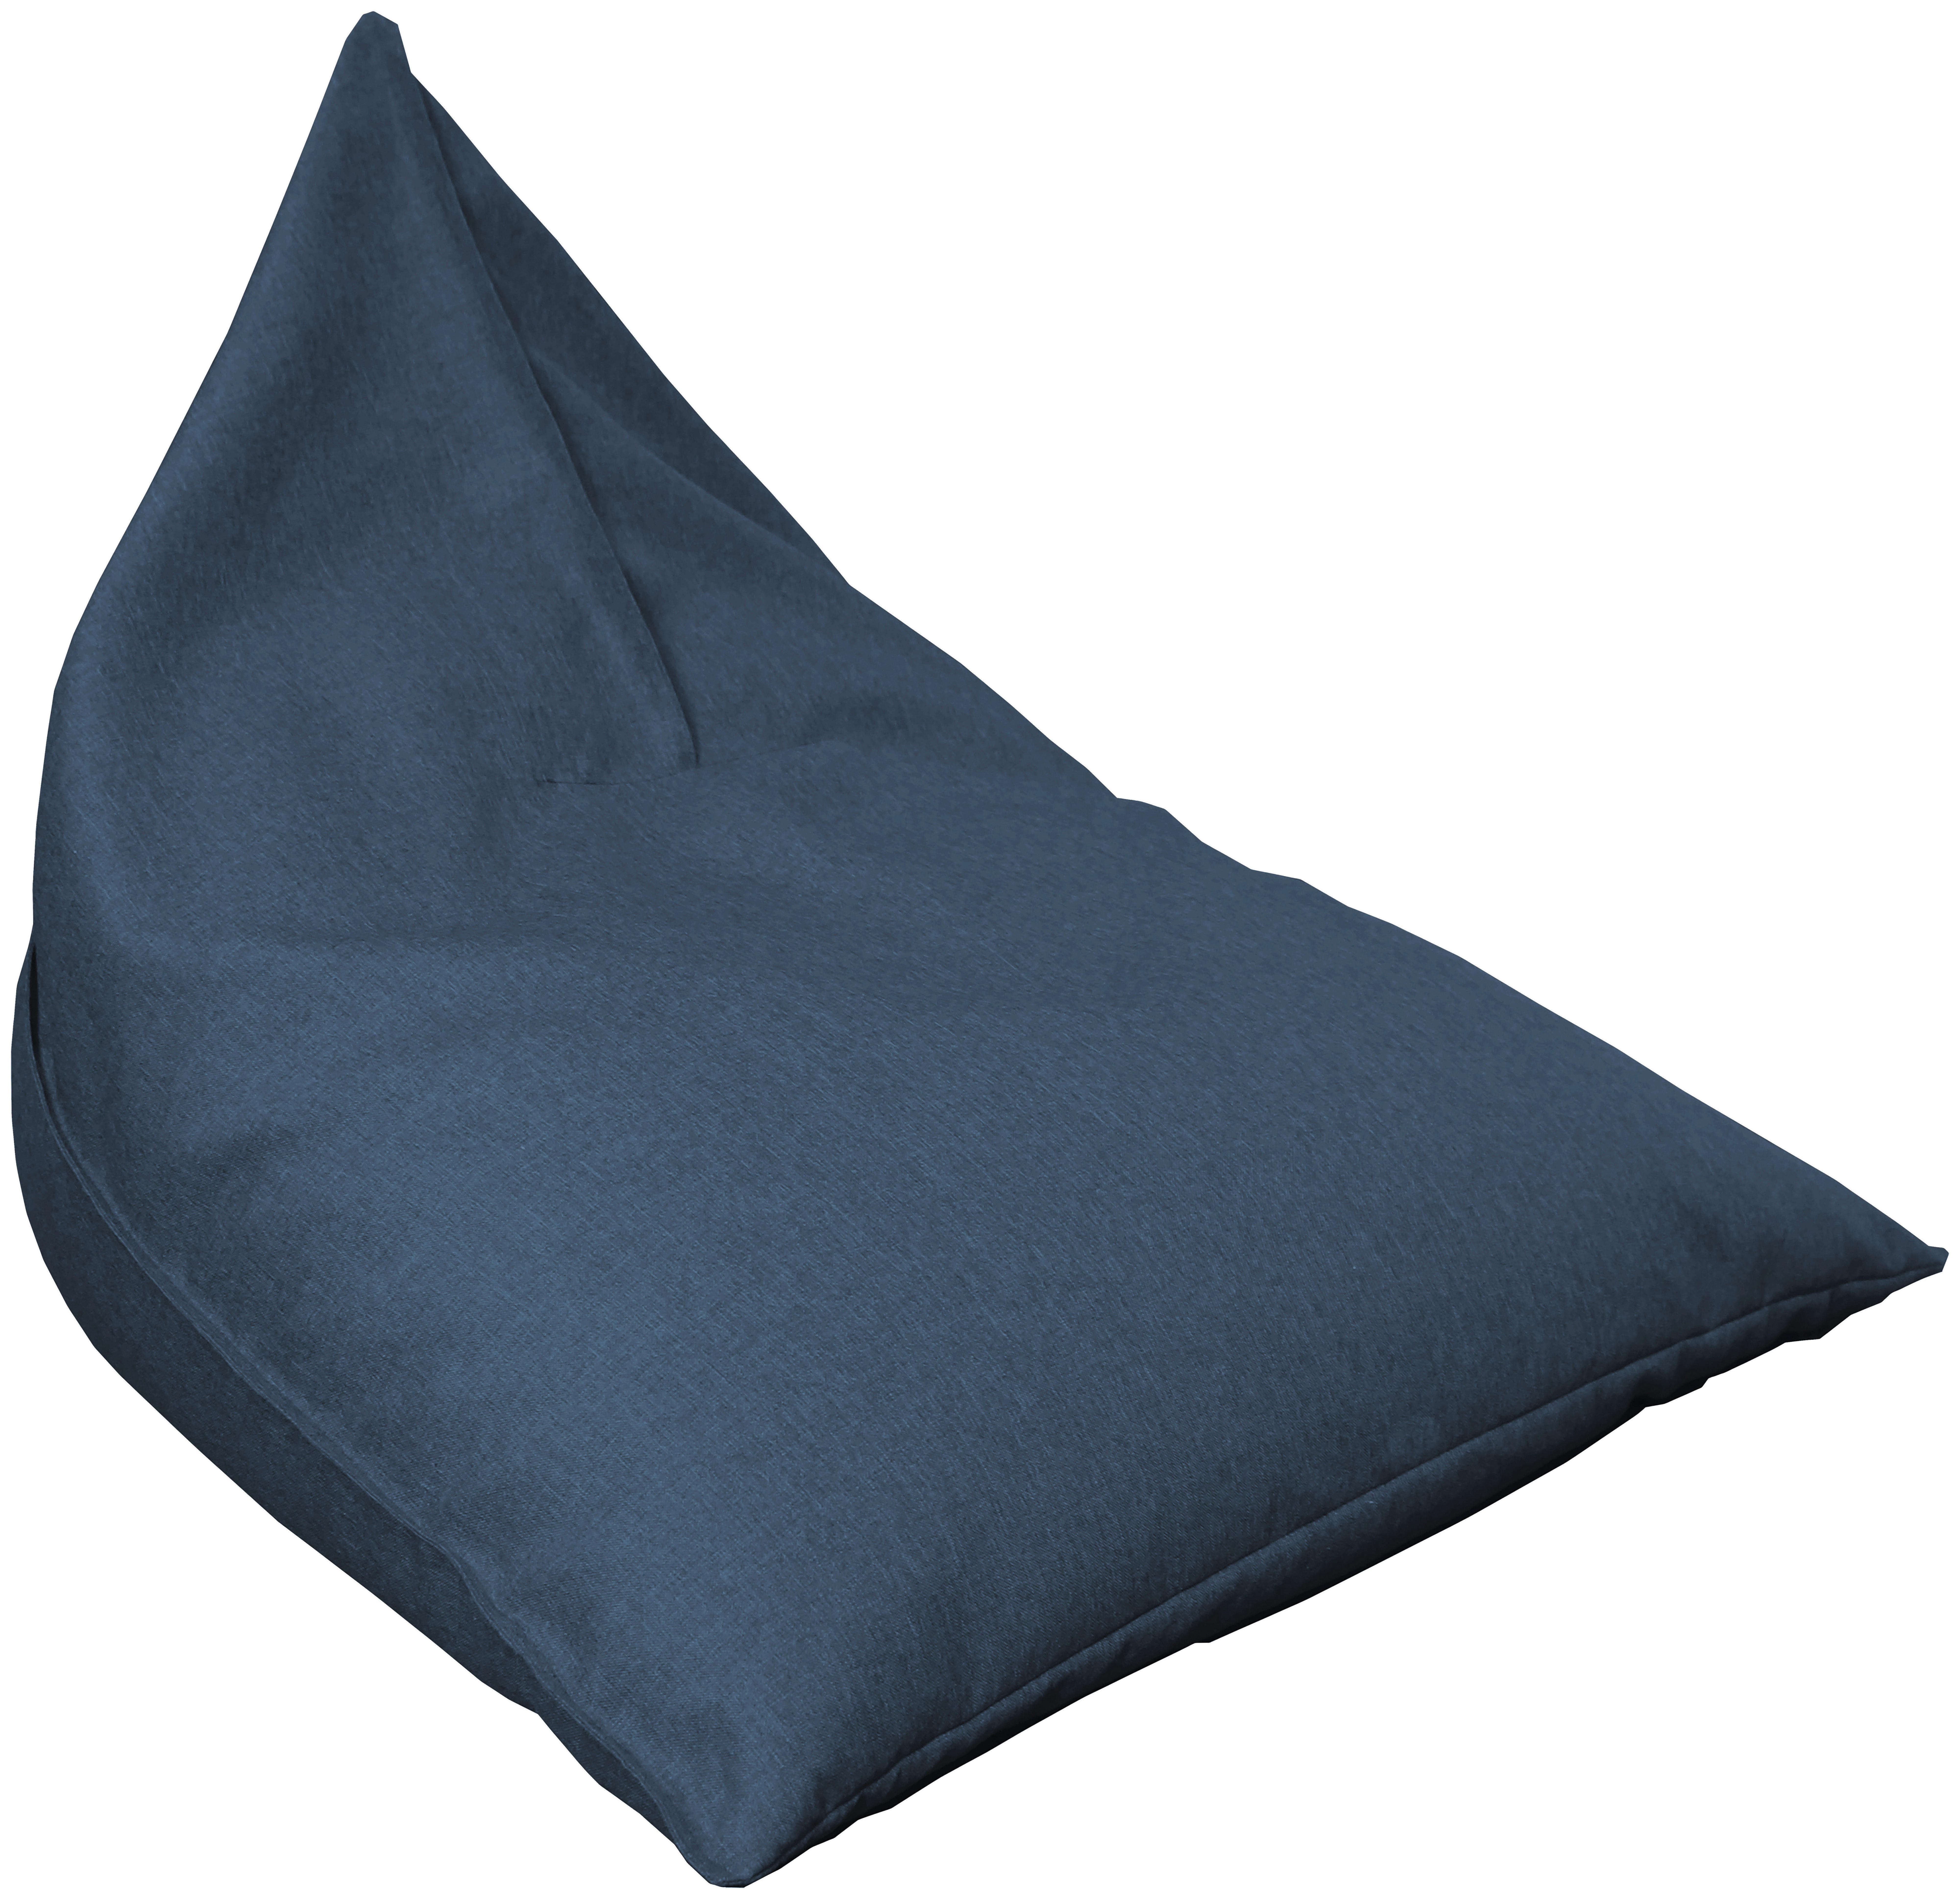 SAC DE ȘEZUT 230 l  - albastru, Design, textil (110/85/130cm) - Carryhome